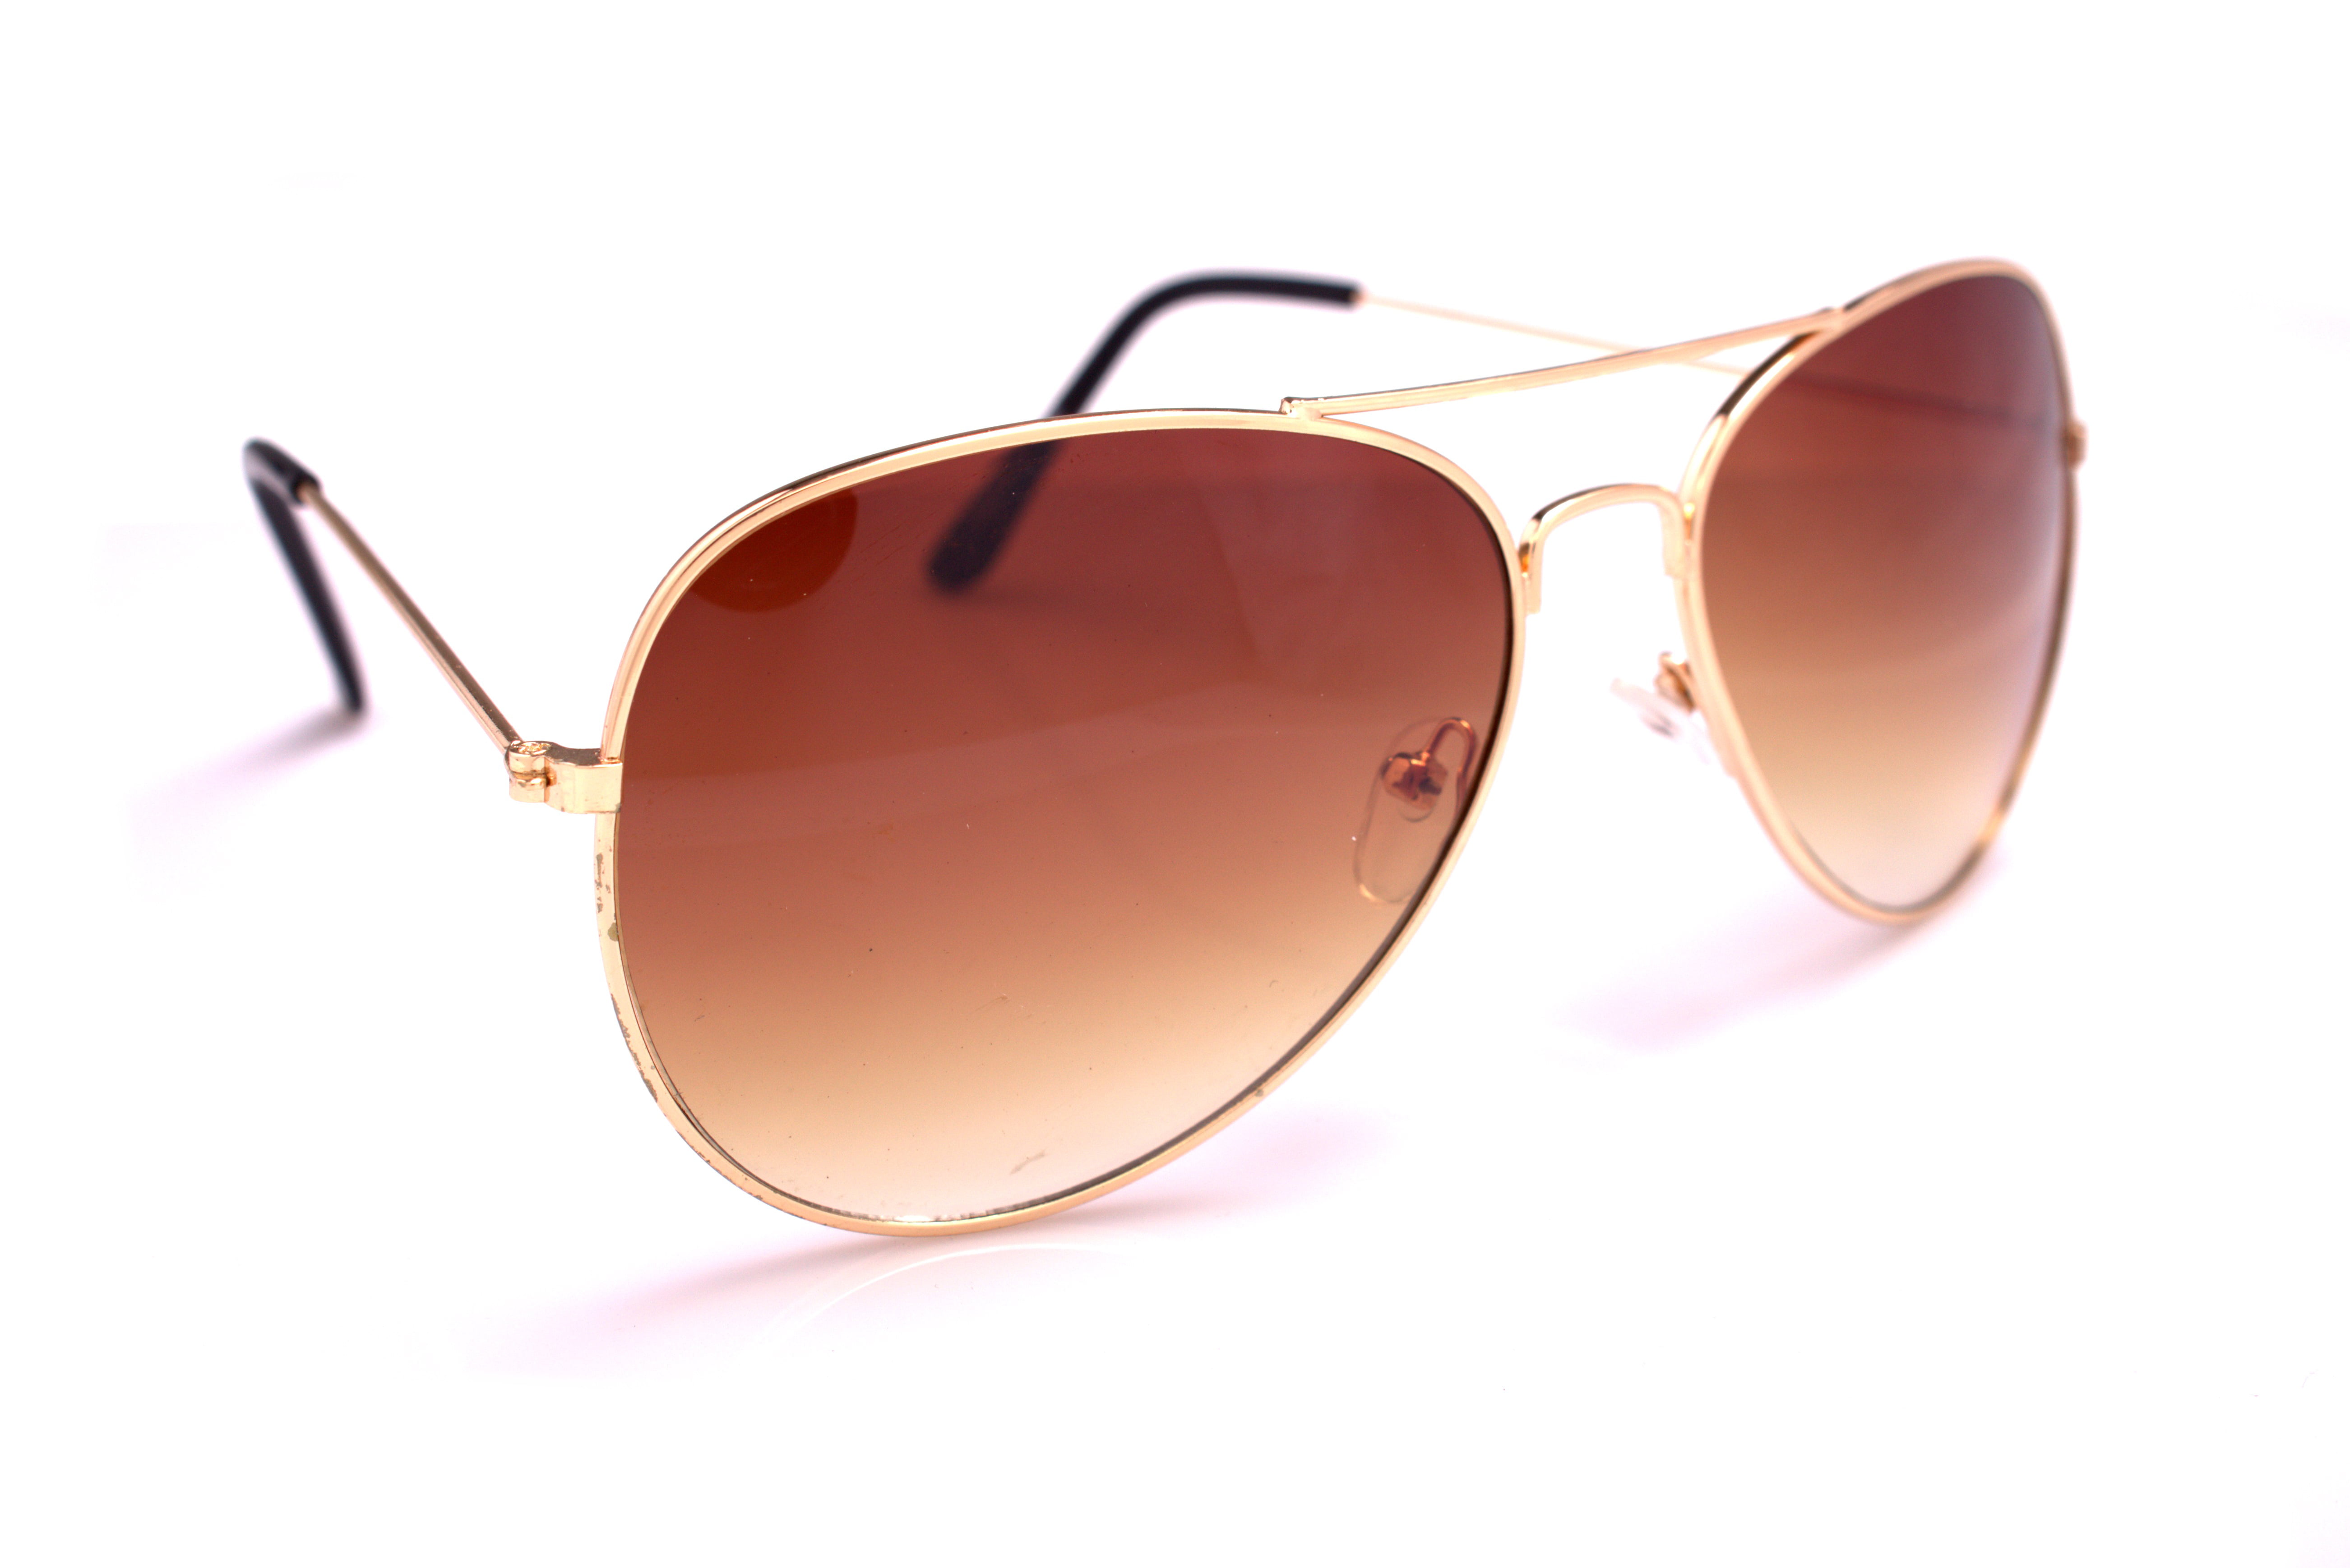 Gold Dark Aviator Sunglasses Shades- 70s Style Adult Aviators